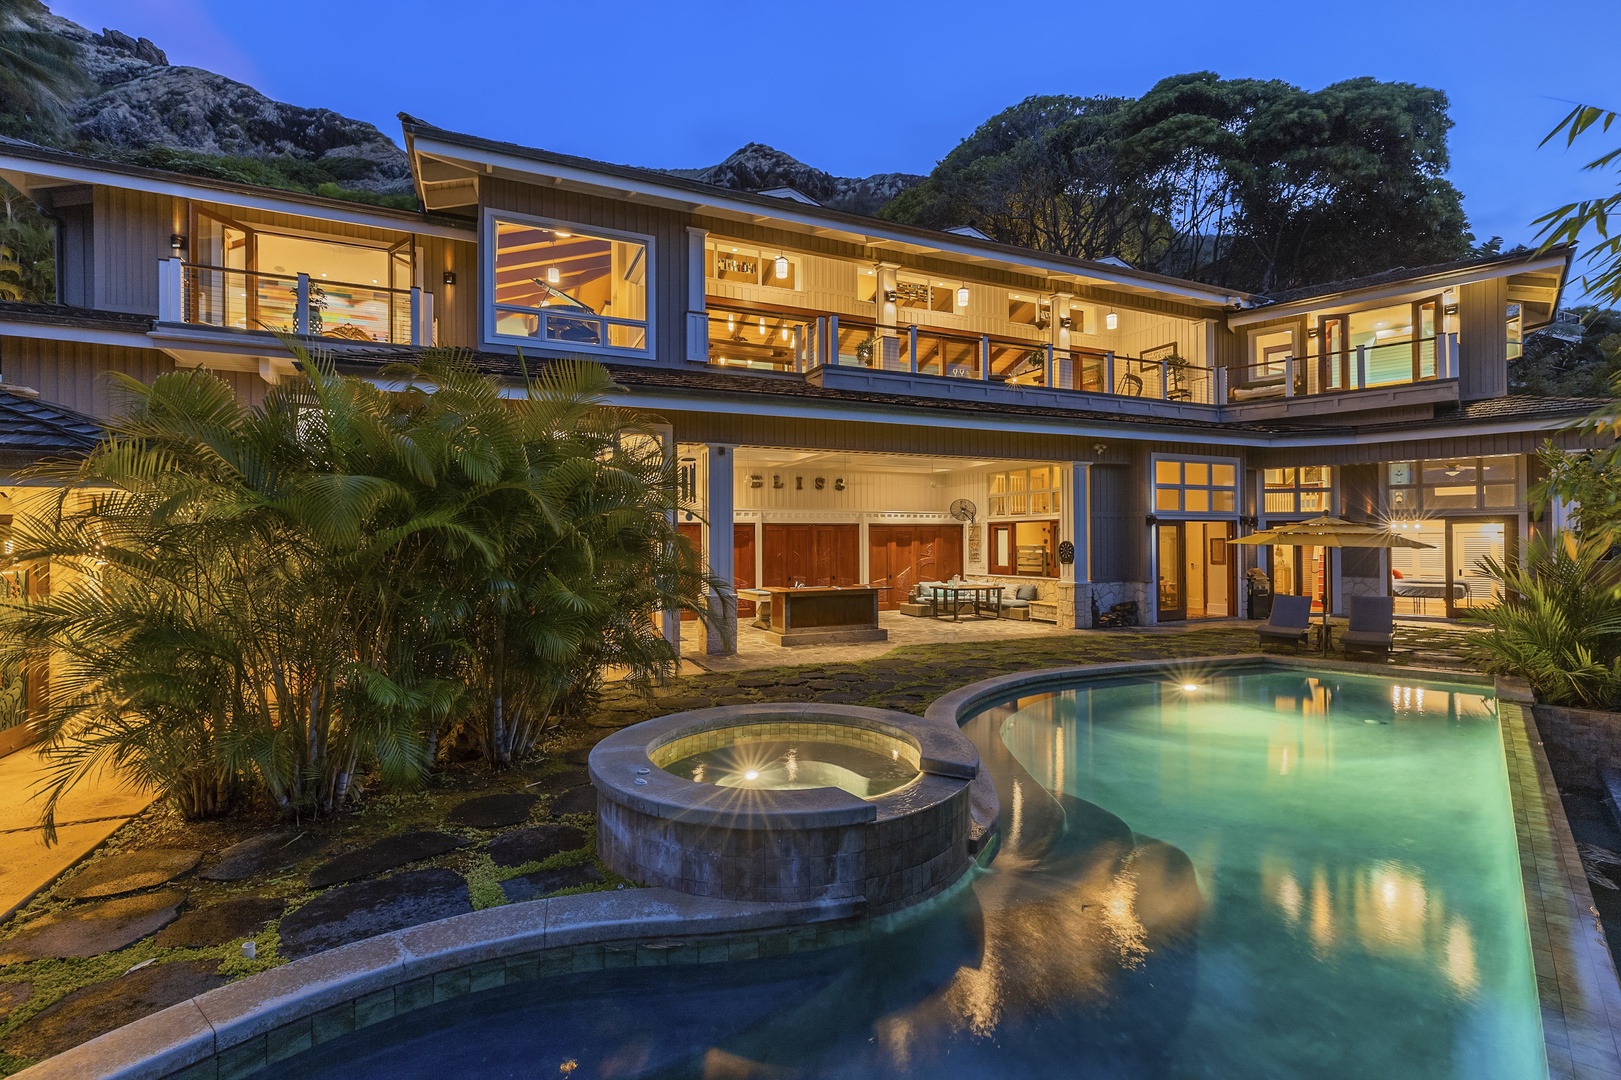 Kailua Vacation Rentals, Lanikai Villa* - This expansive villa is just beautiful at dusk